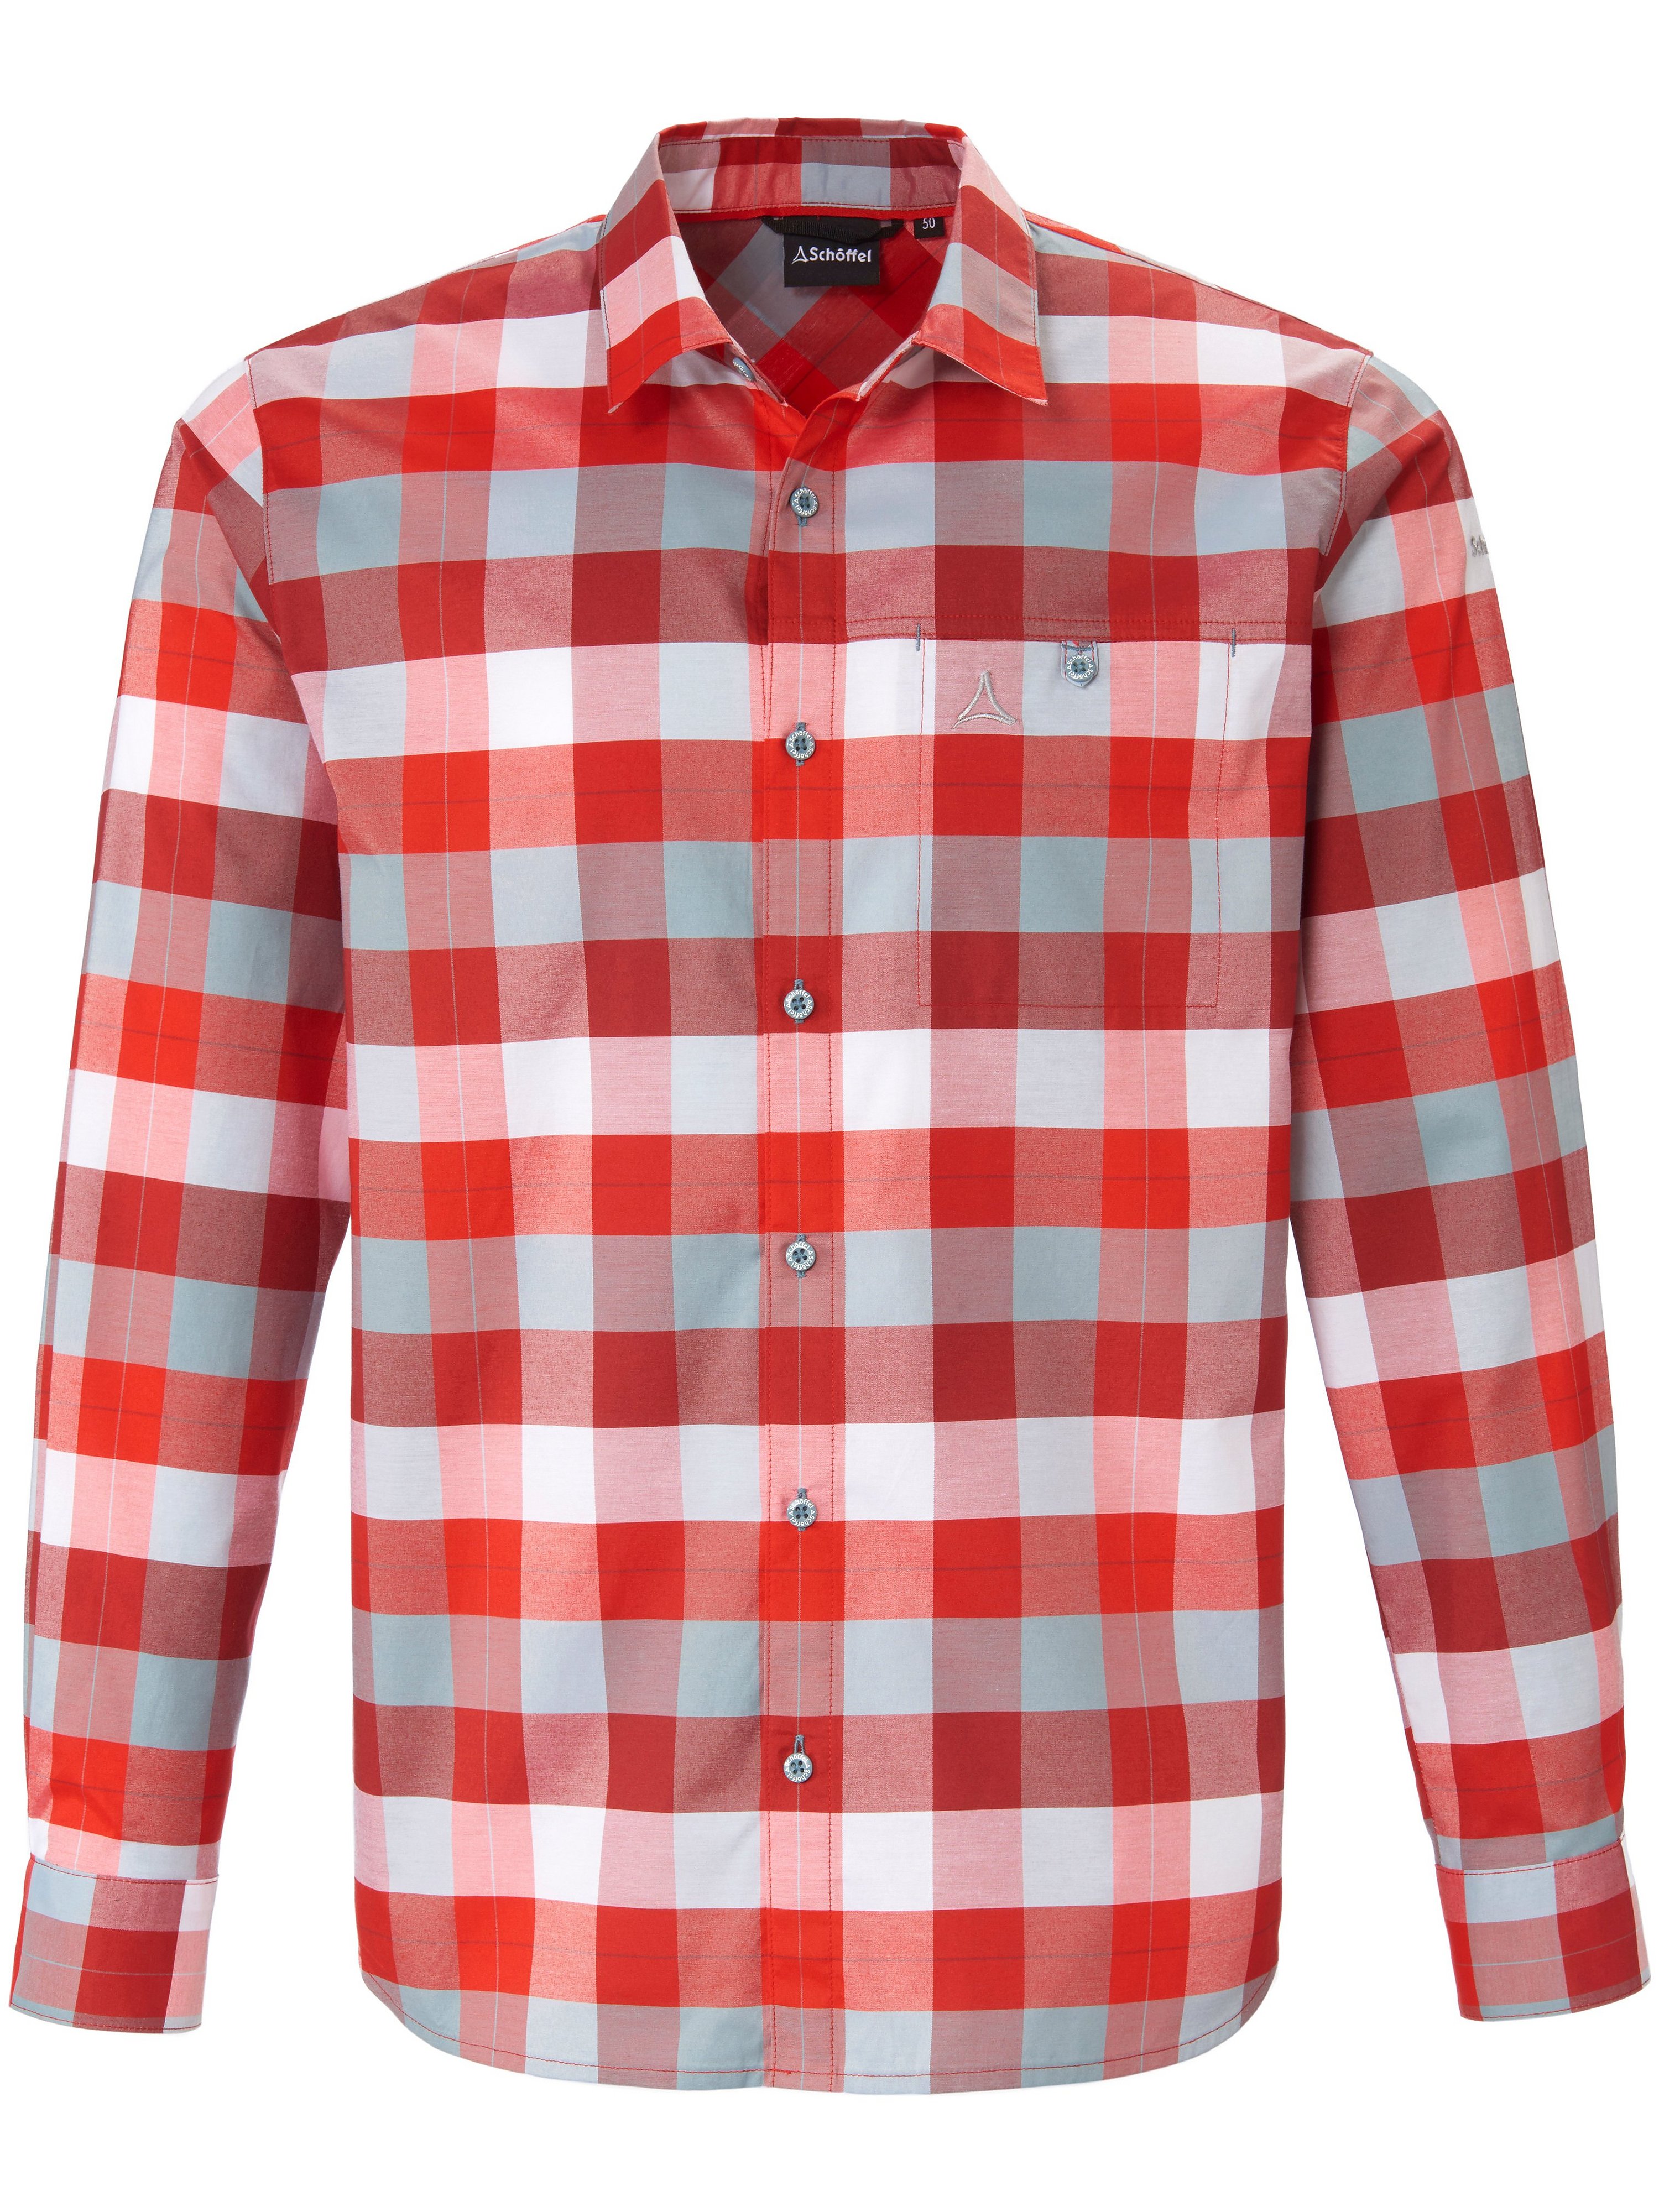 Overhemd Van Schöffel rood